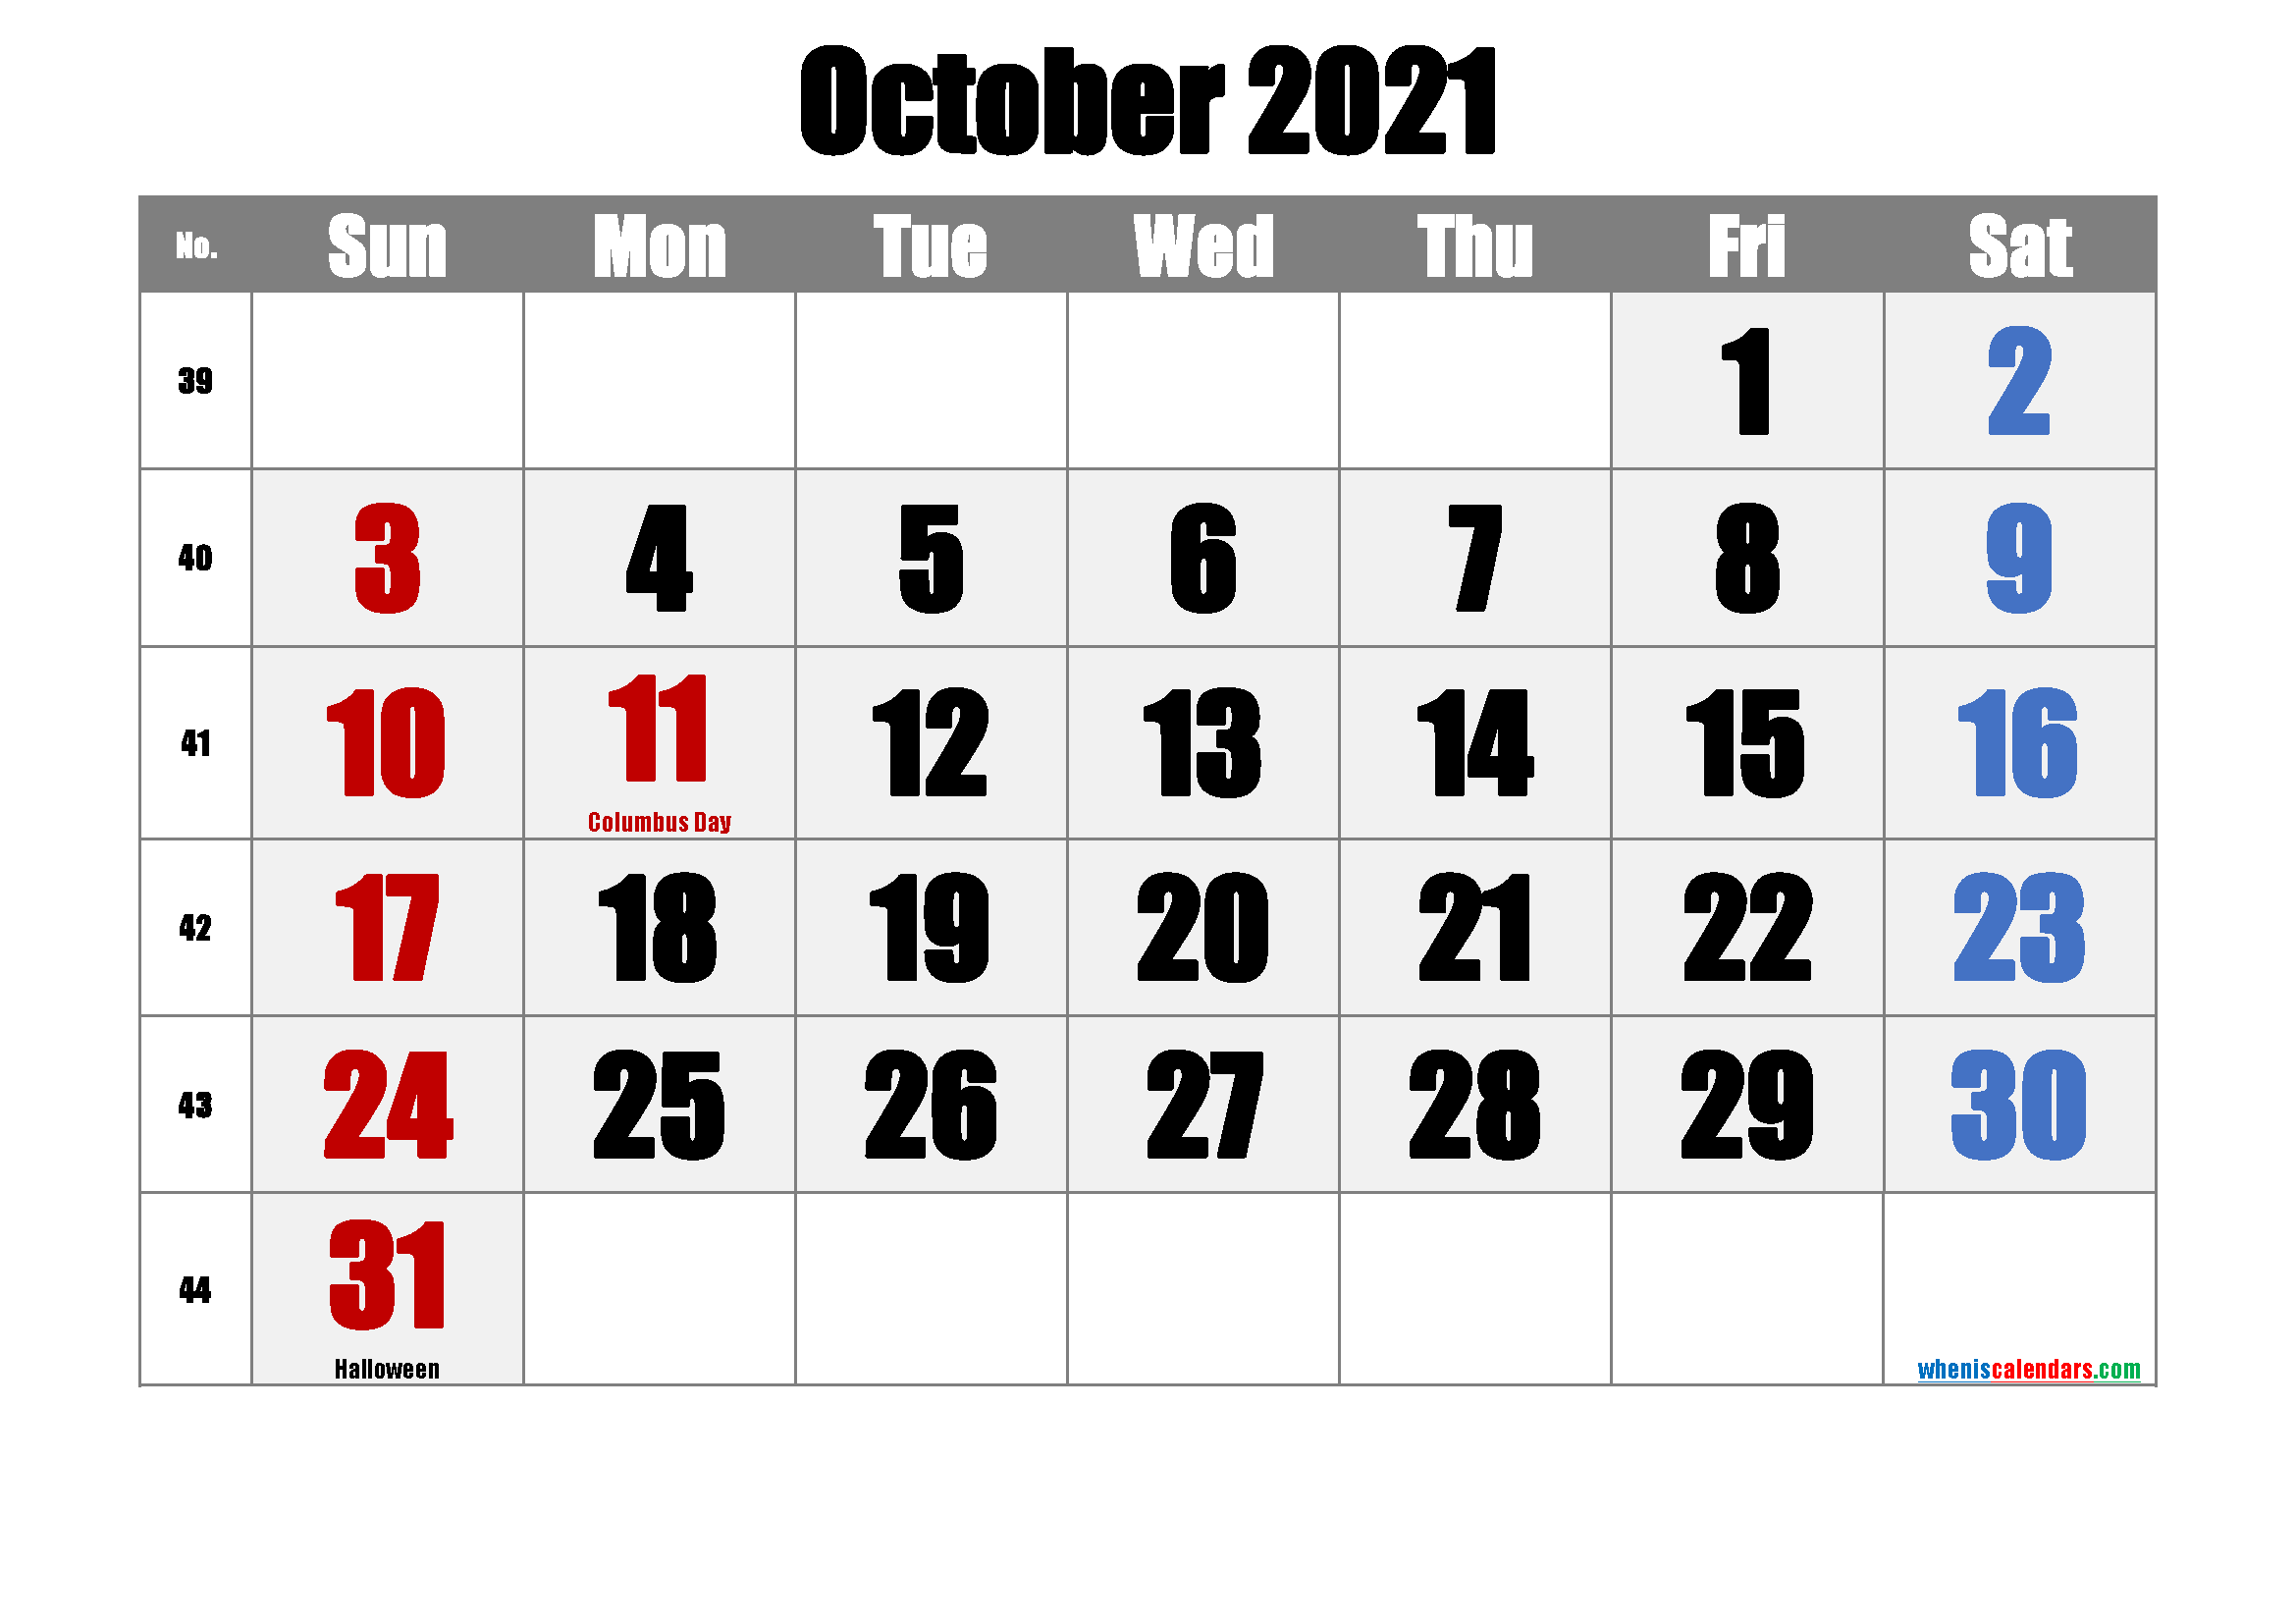 OCTOBER 2021 Printable Calendar with Holidays